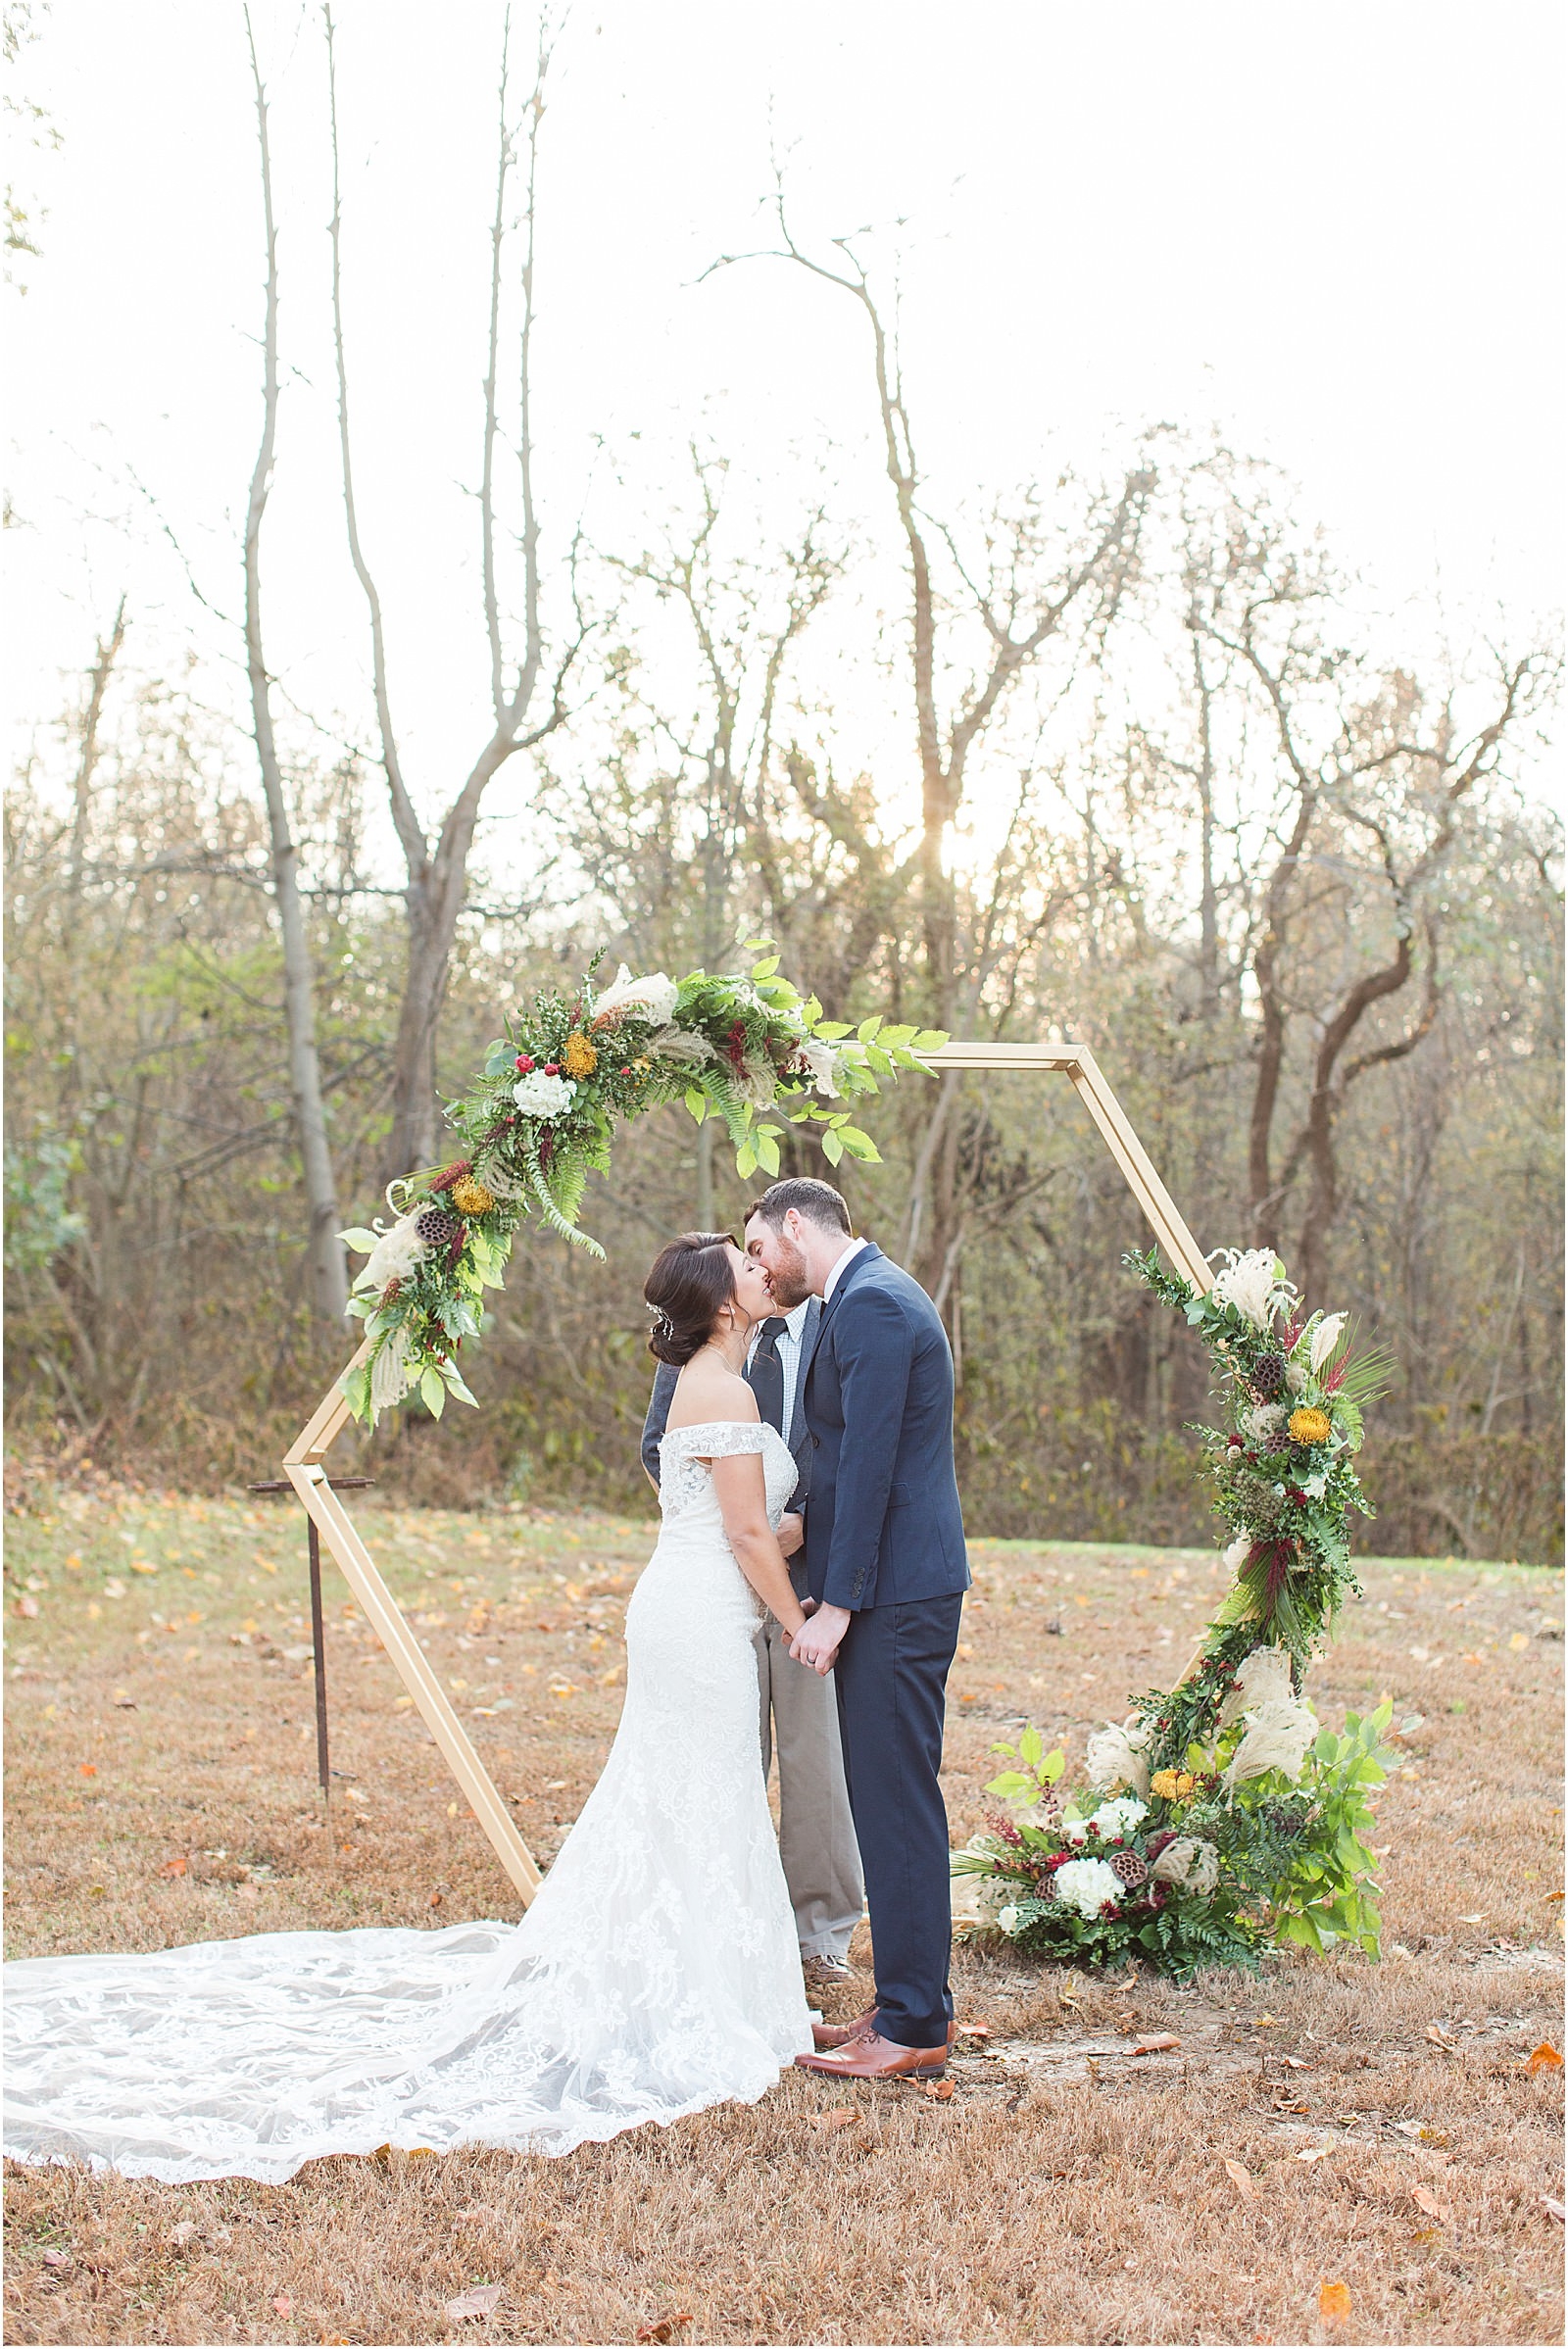 Walker and Alyssa's intimate fall wedding in Southern Indiana. | Wedding Photography | The Corner House Wedding | Southern Indiana Wedding | #fallwedding #intimatewedding | 069.jpg